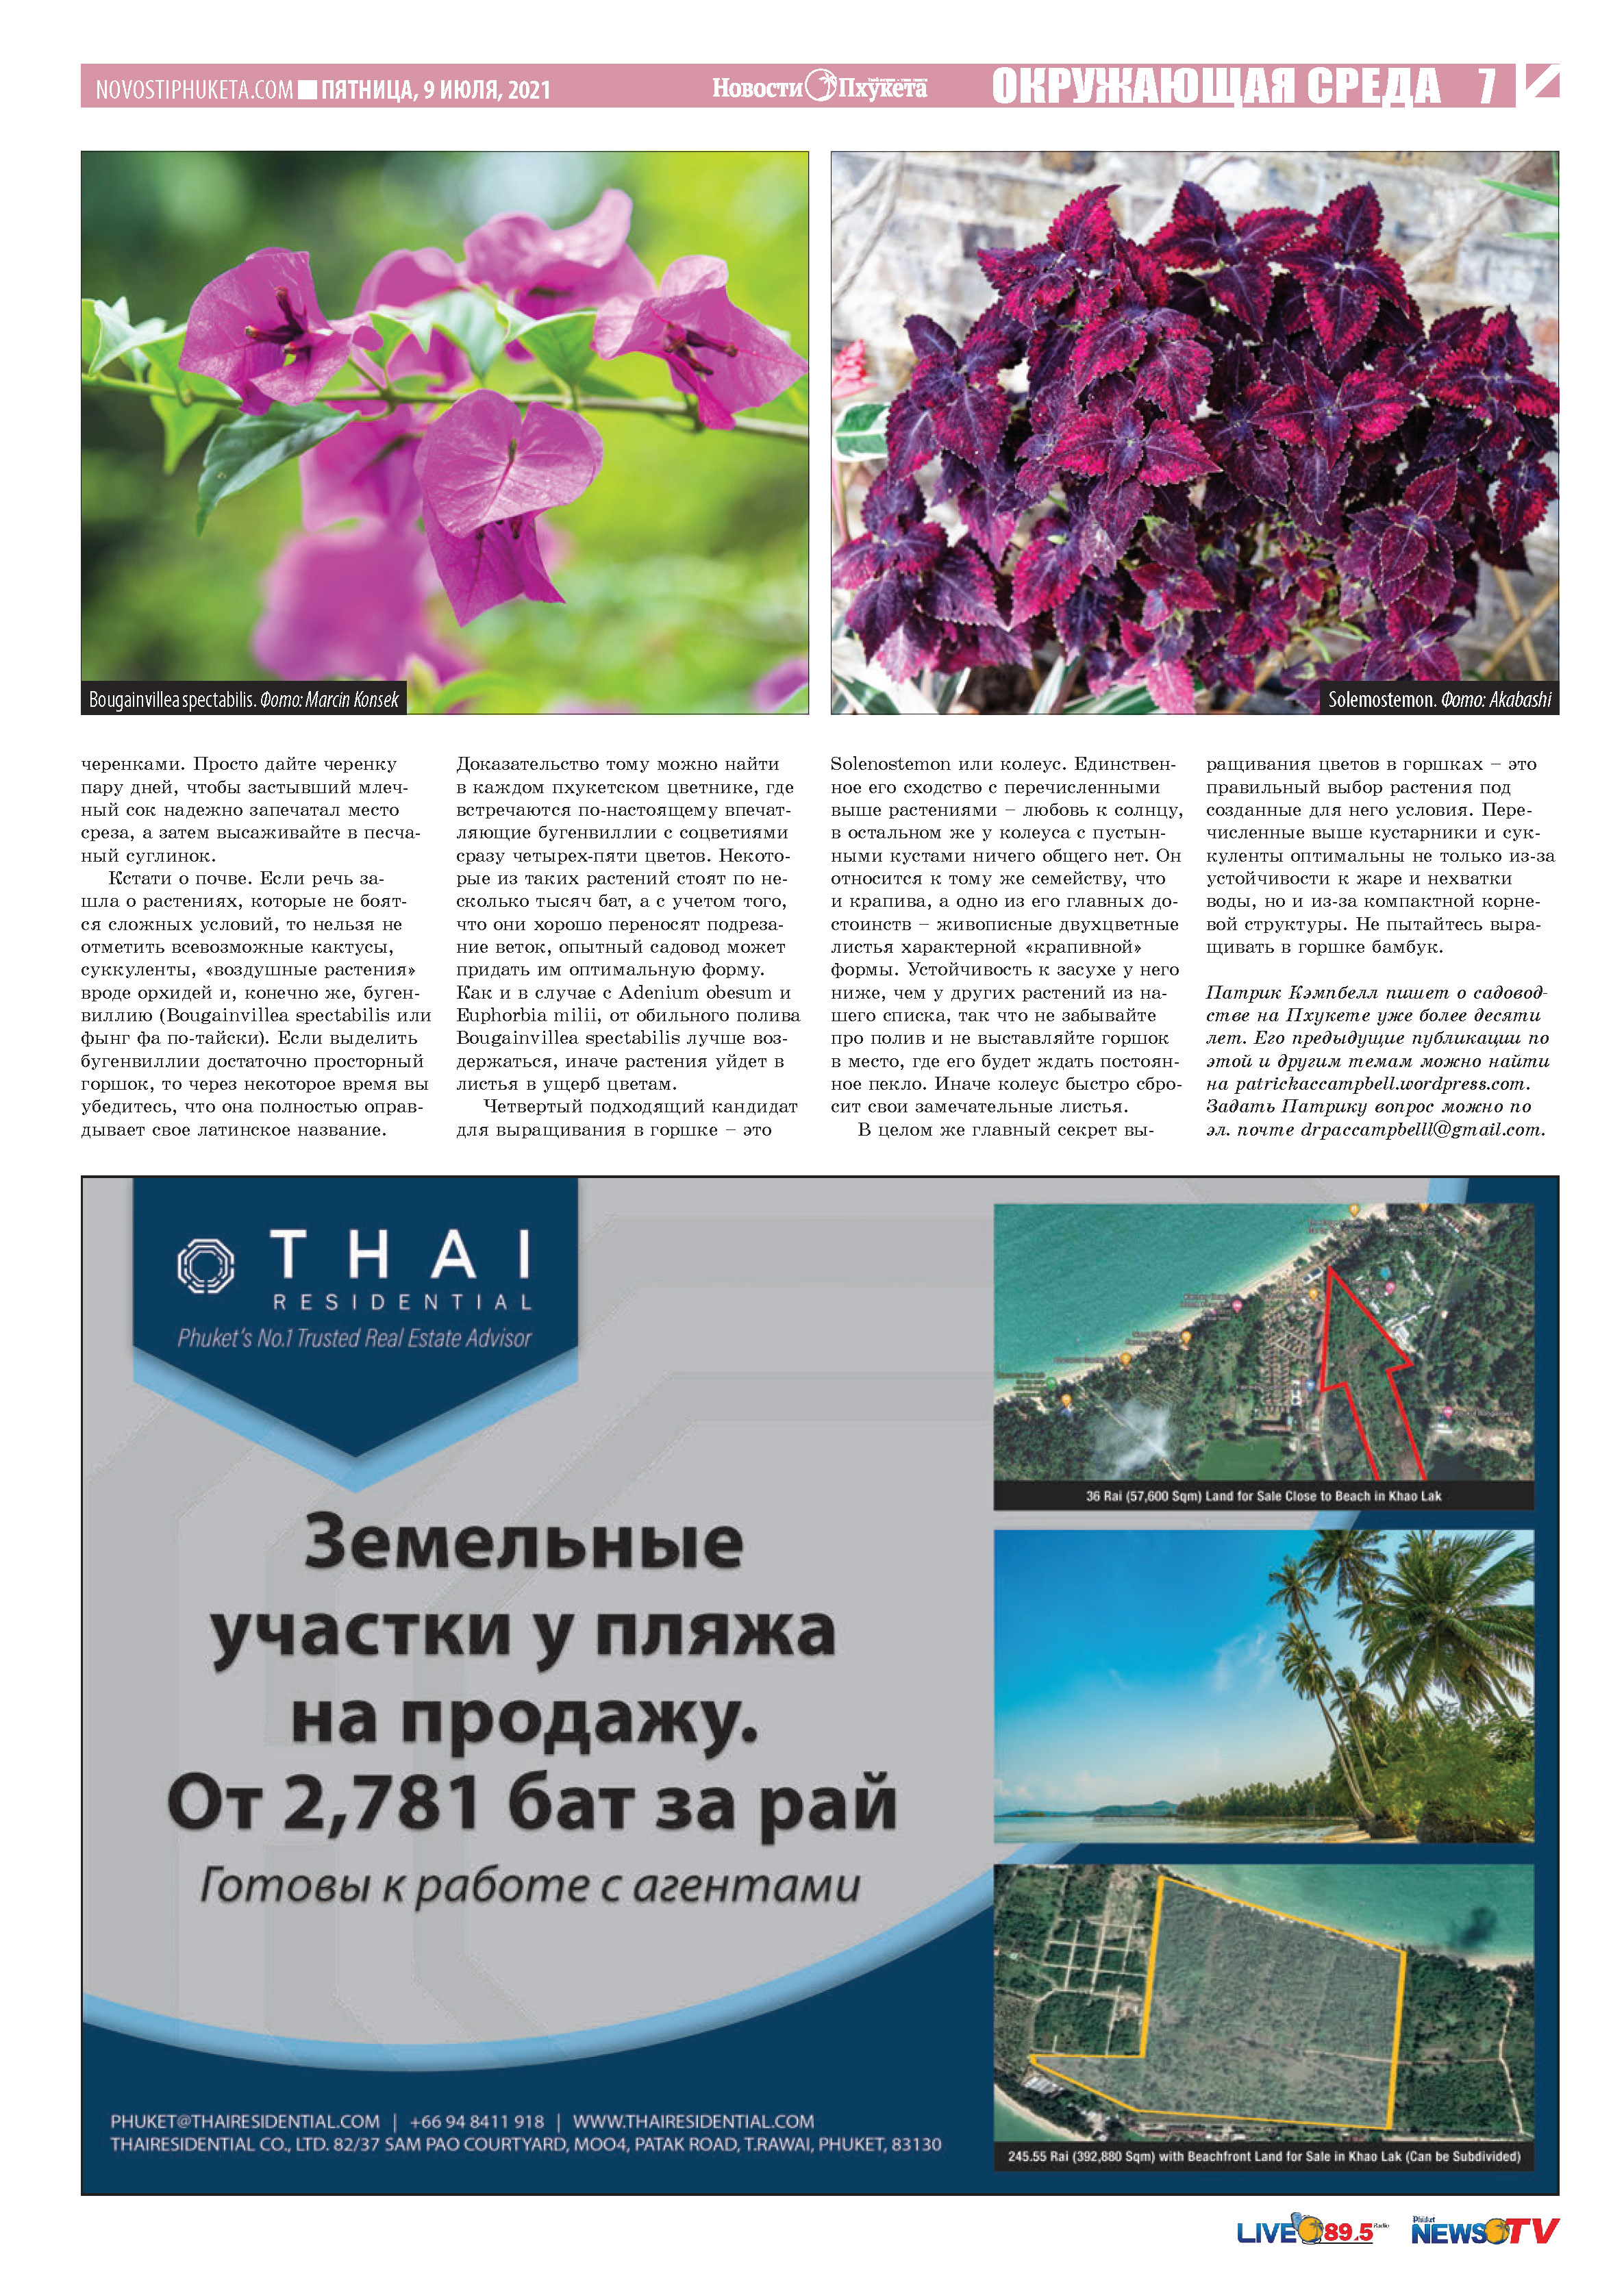 Phuket Newspaper - https://www.novostiphuketa.com/archive/09-07-2021/09-07-2021_Page_07.jpg